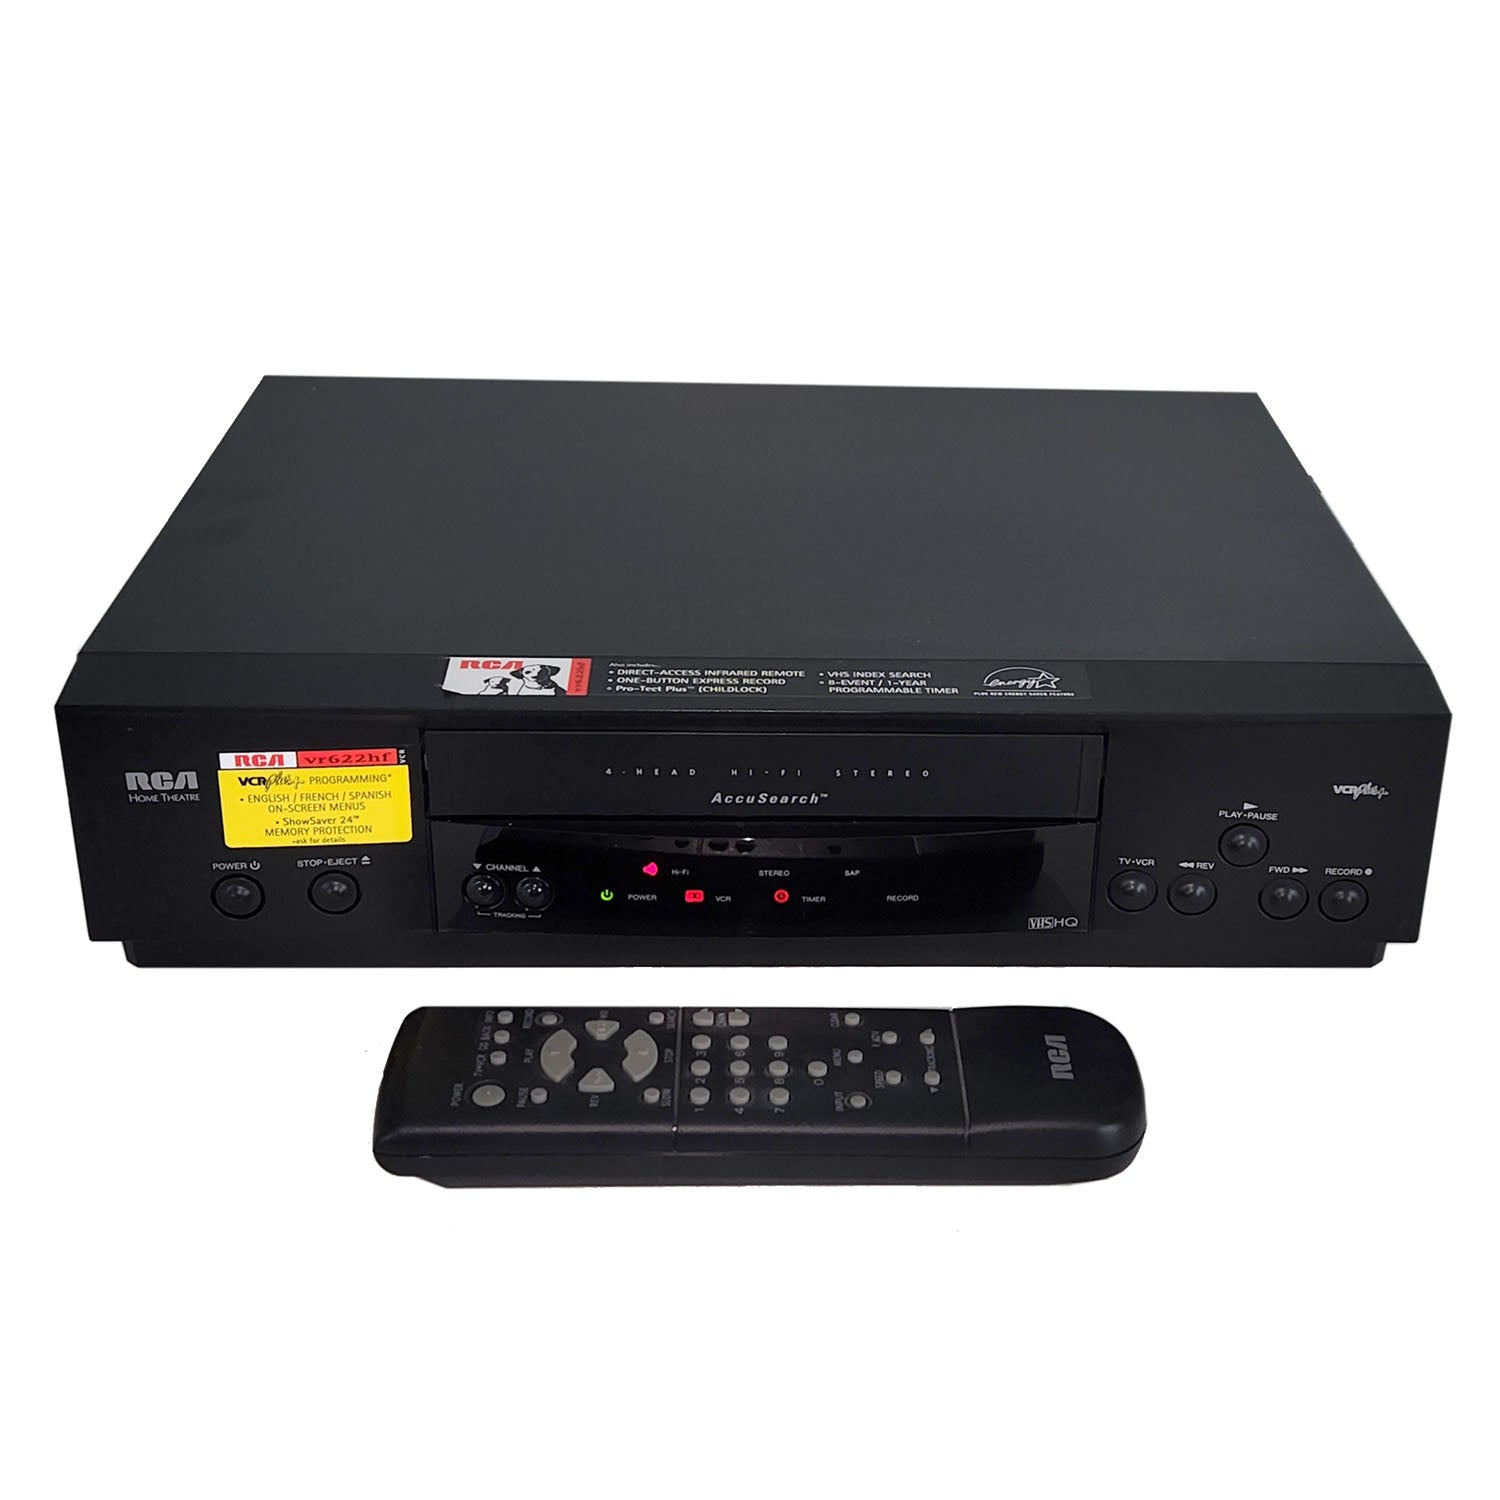 RCA VR622HF VCR, 4-Head Hi-Fi Stereo